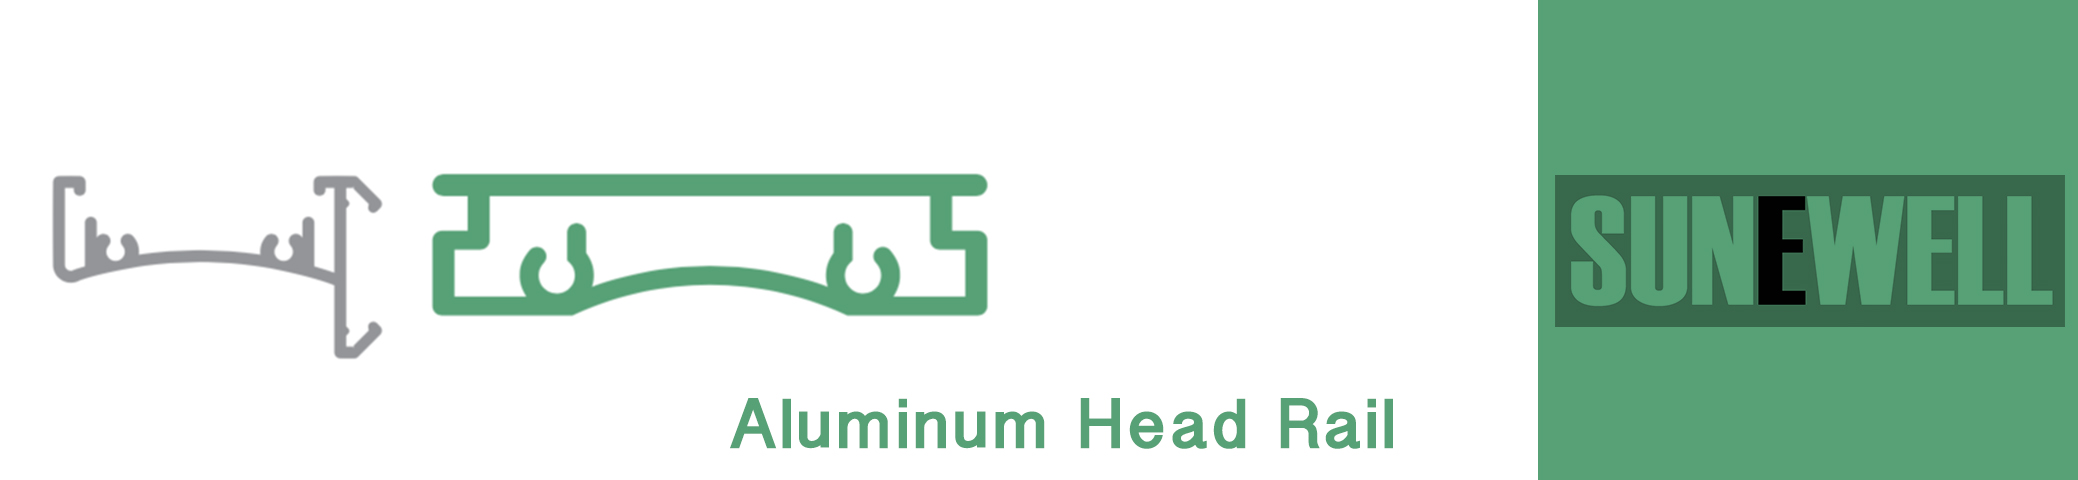 Roller Blinds Aluminum Head Rail Series